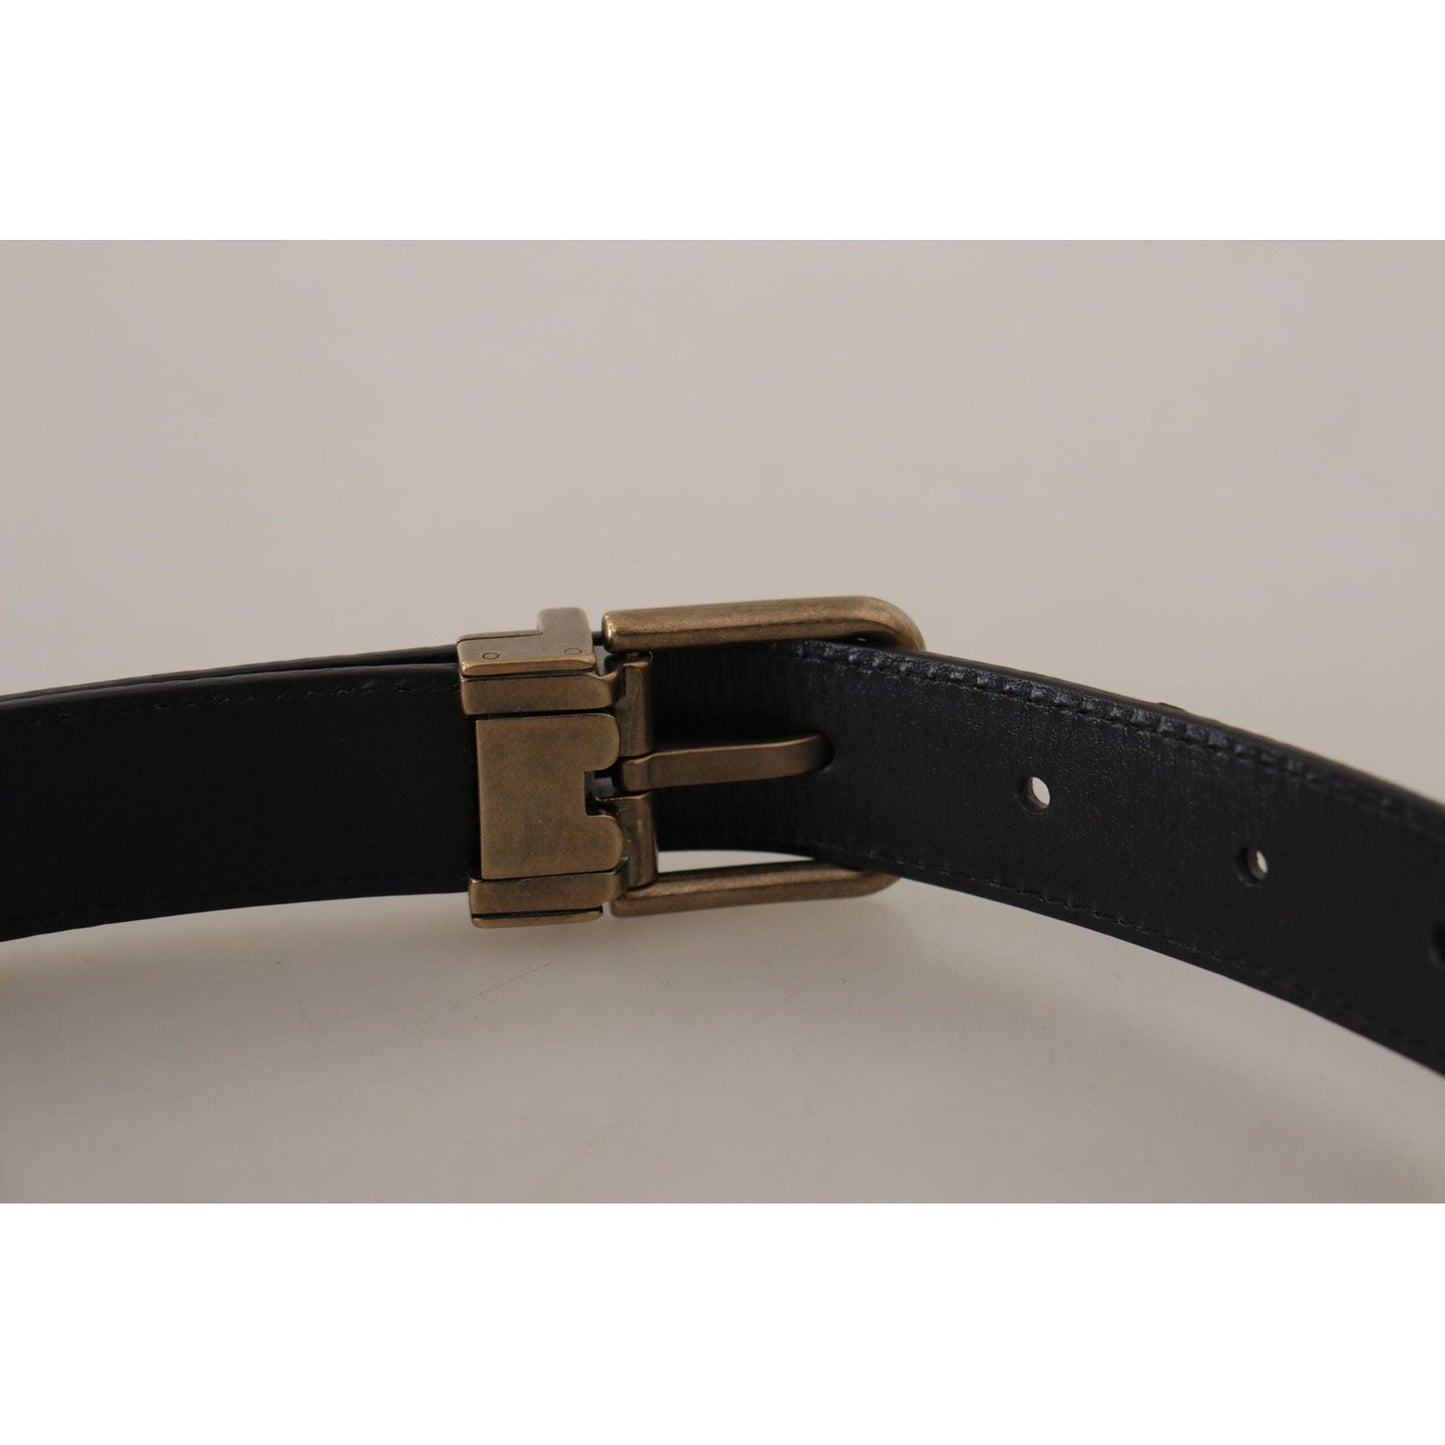 Dolce & Gabbana Chic Engraved Logo Leather Belt brown-leather-leopard-print-bronze-metal-buckle-belt IMG_8971-1-scaled-e0ce6622-d65.jpg